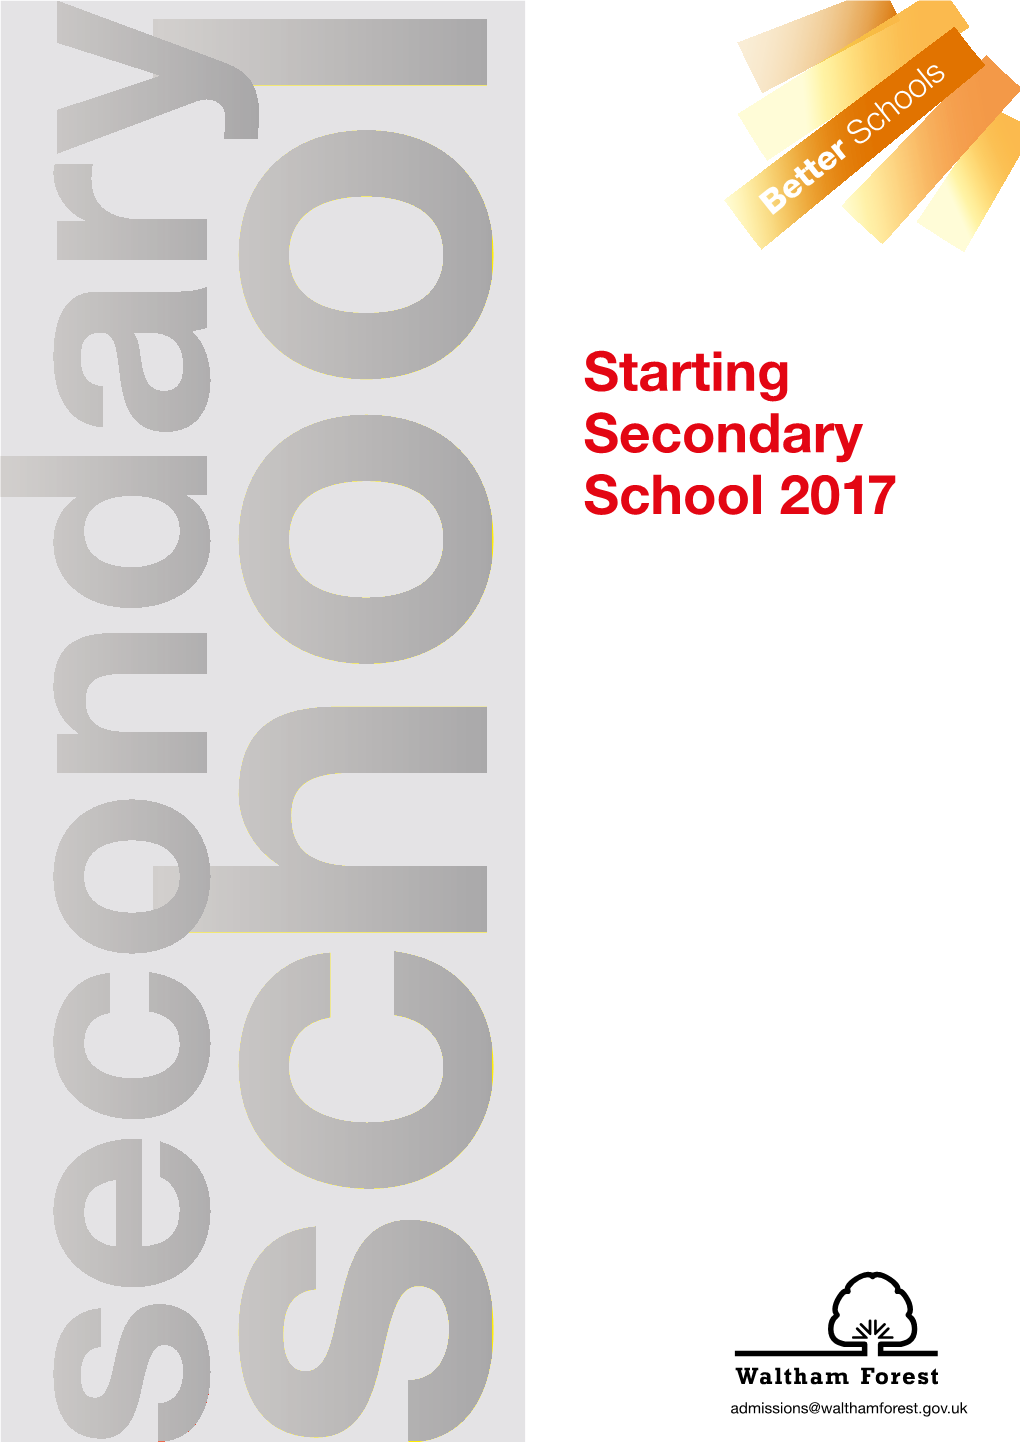 Starting Secondary School 2017